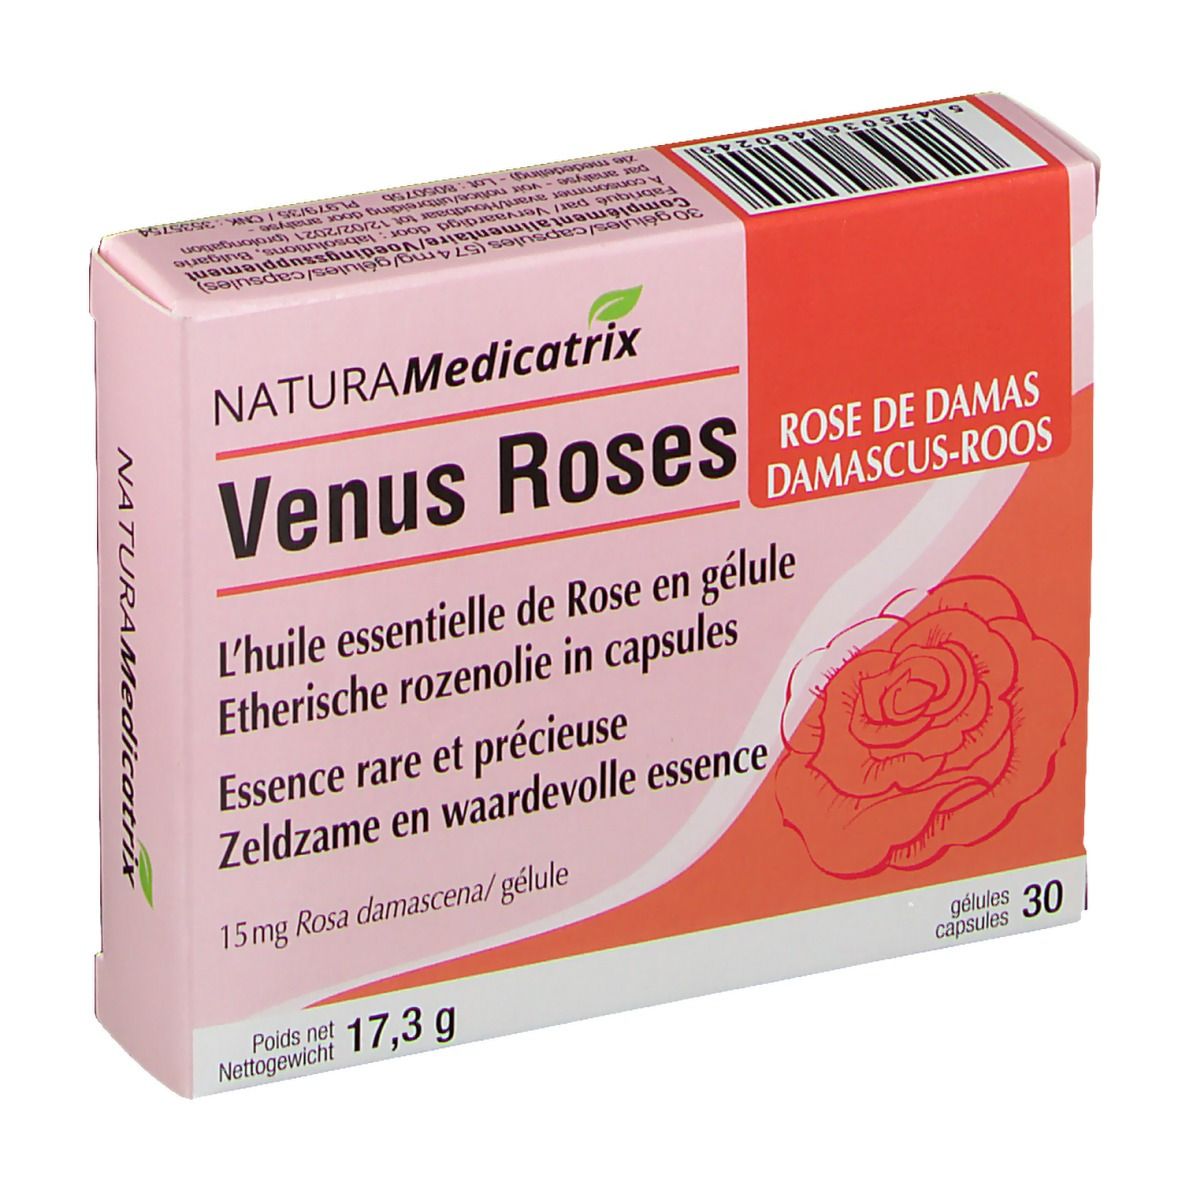 Venus Roses Rose de Damas 30 pc(s) - Redcare Apotheke